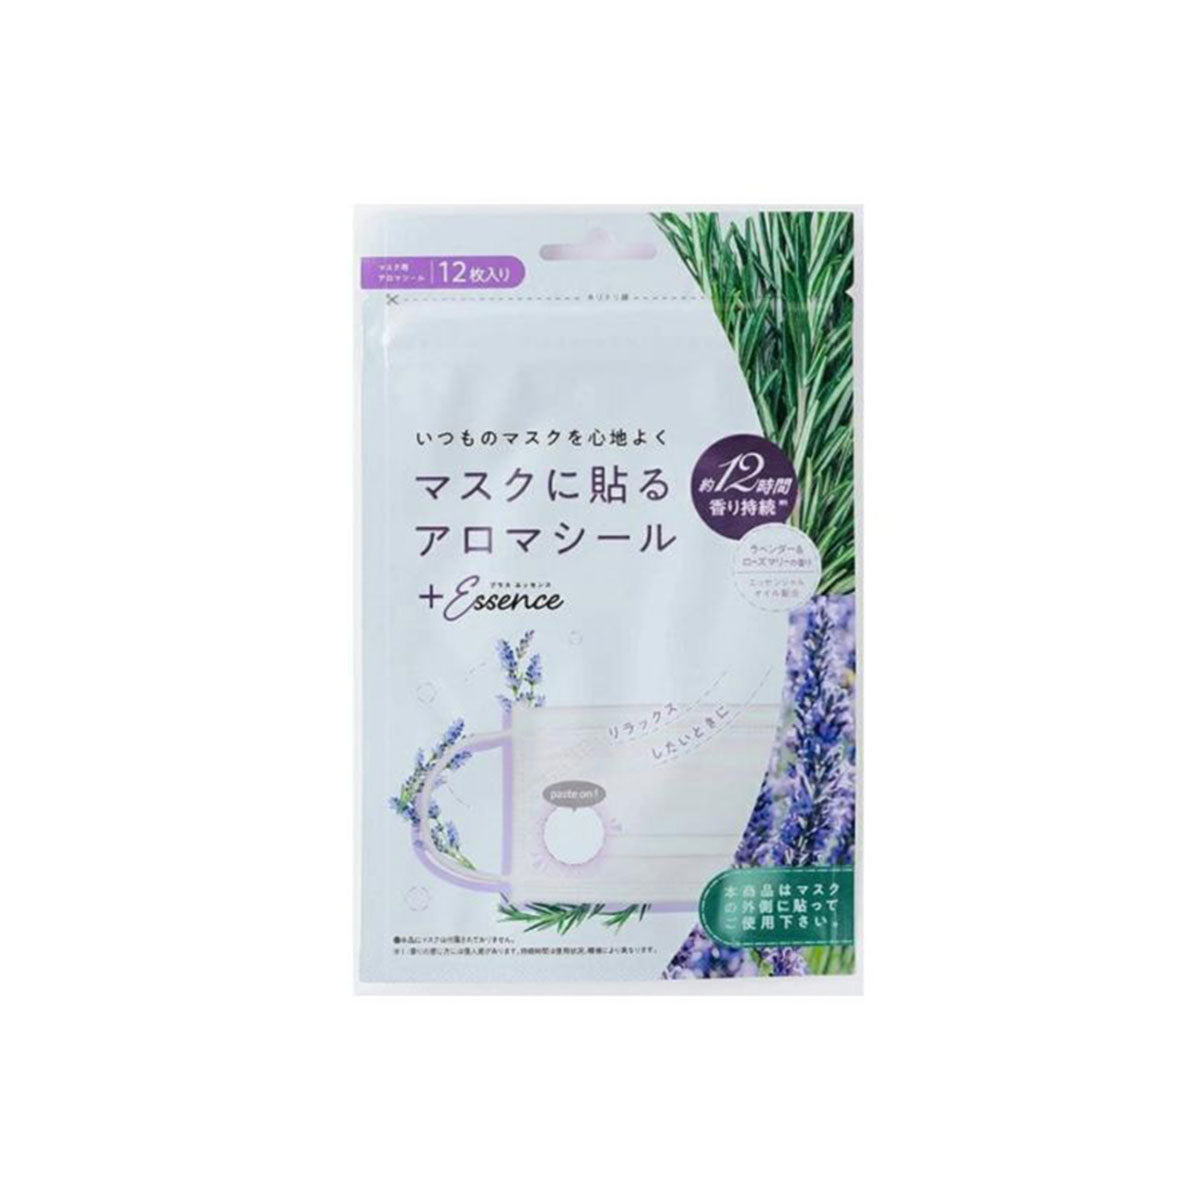 Breath Freshener Mask Sticker # Lavender 12pcs